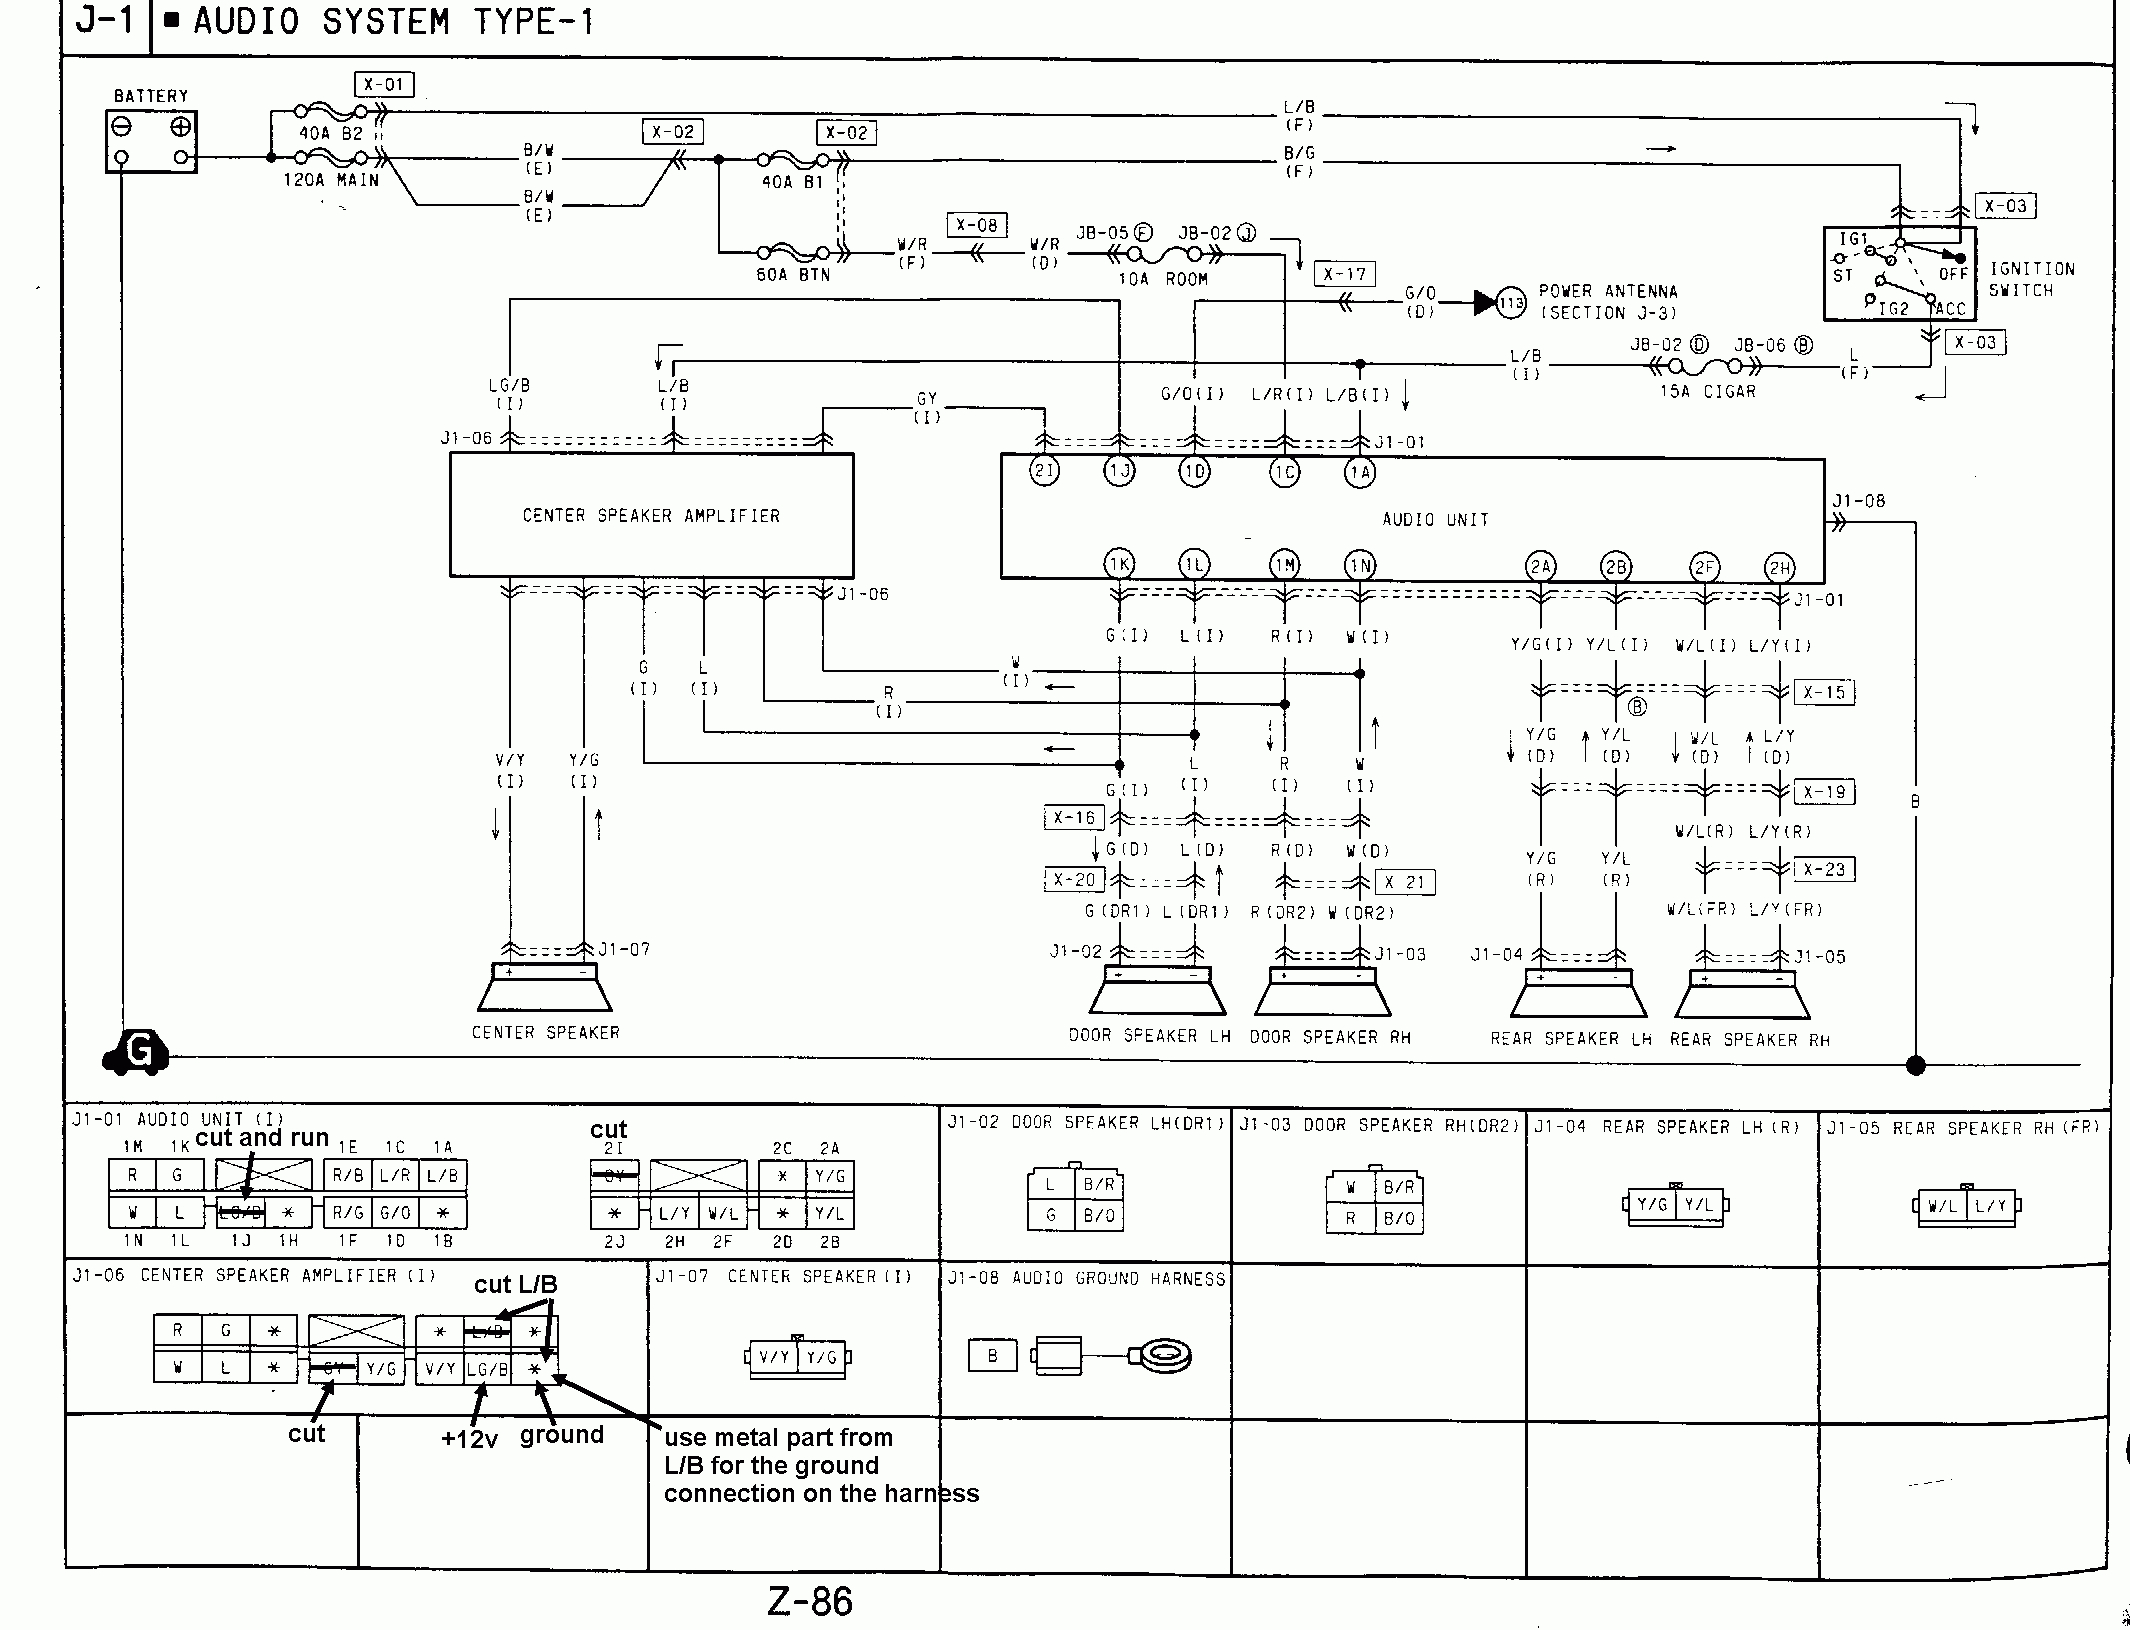 Boss Audio Wiring Diagram Radio | Wiring Diagram - Boss Audio Wiring Diagram